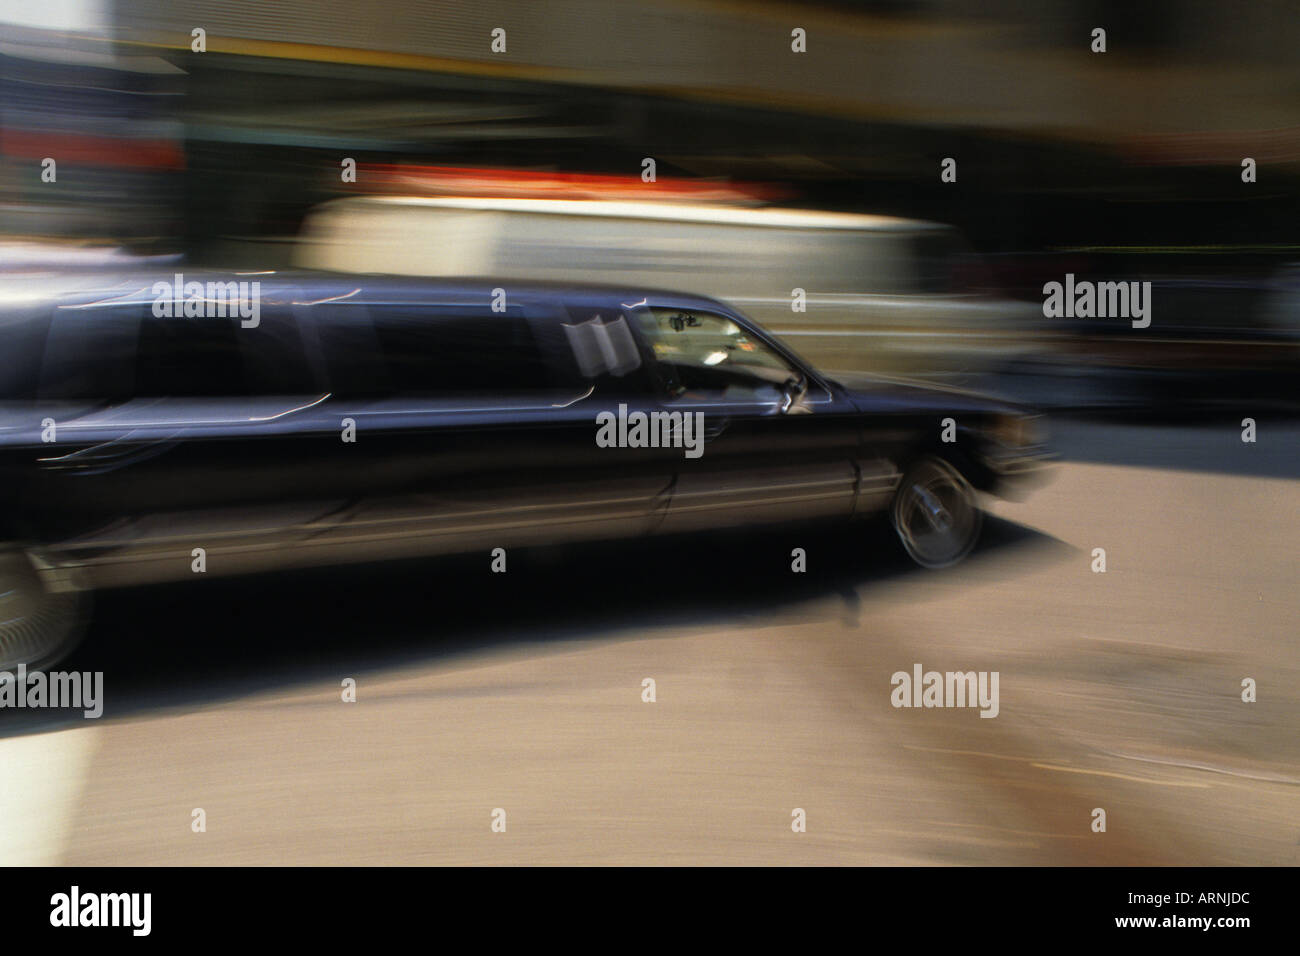 Black Stretch Luxury Car New York City Midtown Manhattan Motion Blurred Fast Life Stock Photo